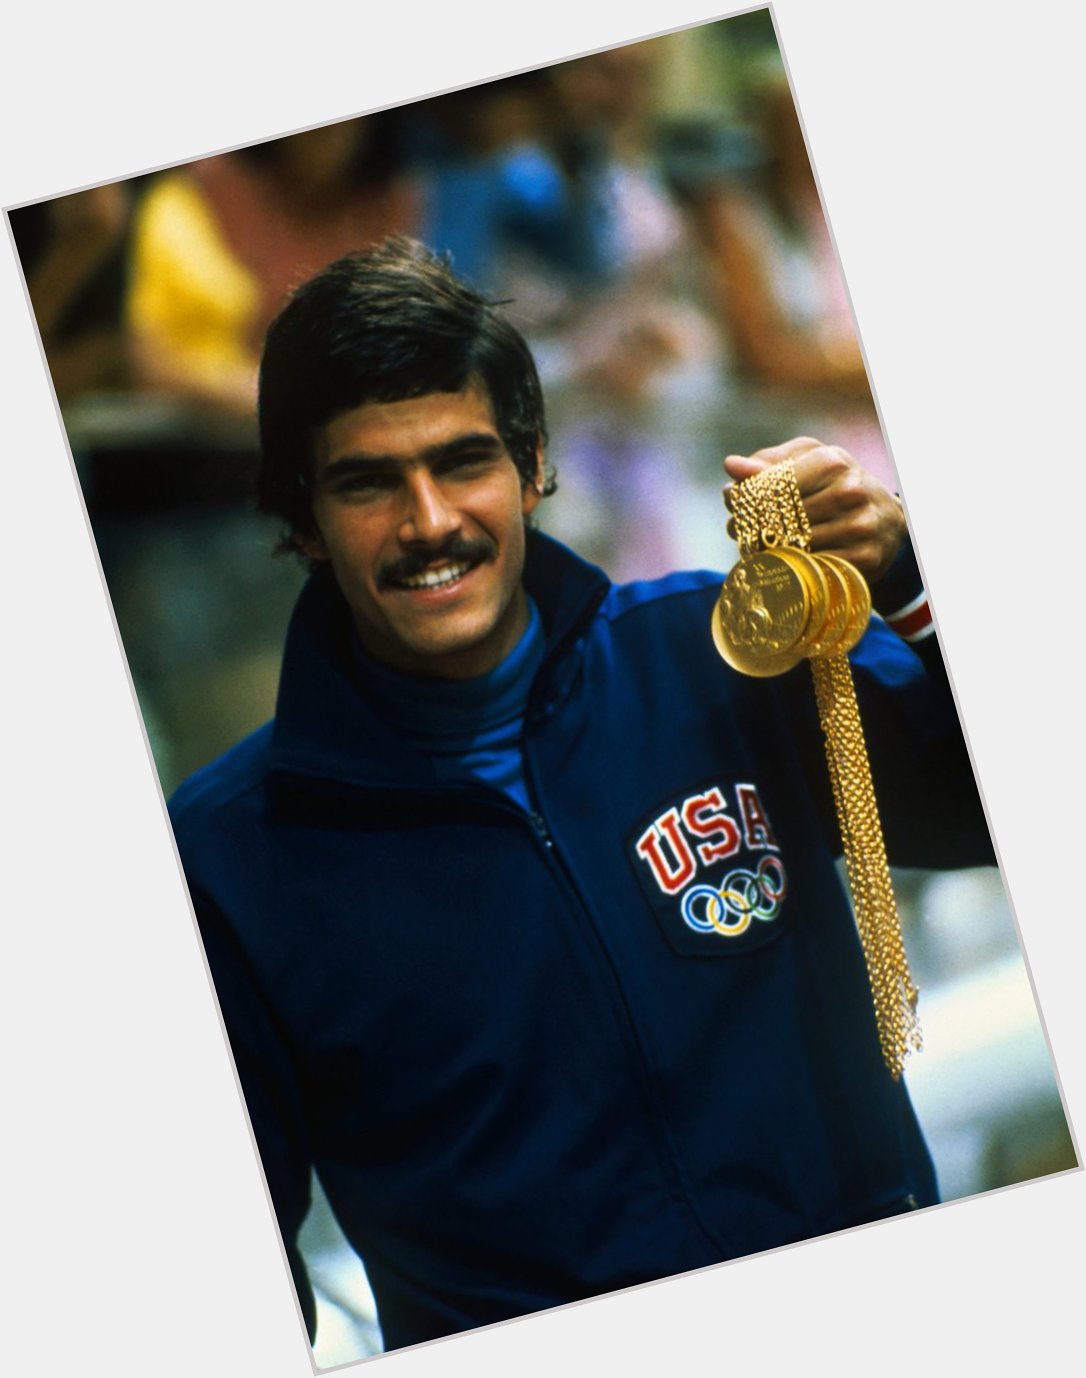 Happy Birthday to Mark Spitz an amazing Olympic Champion! 